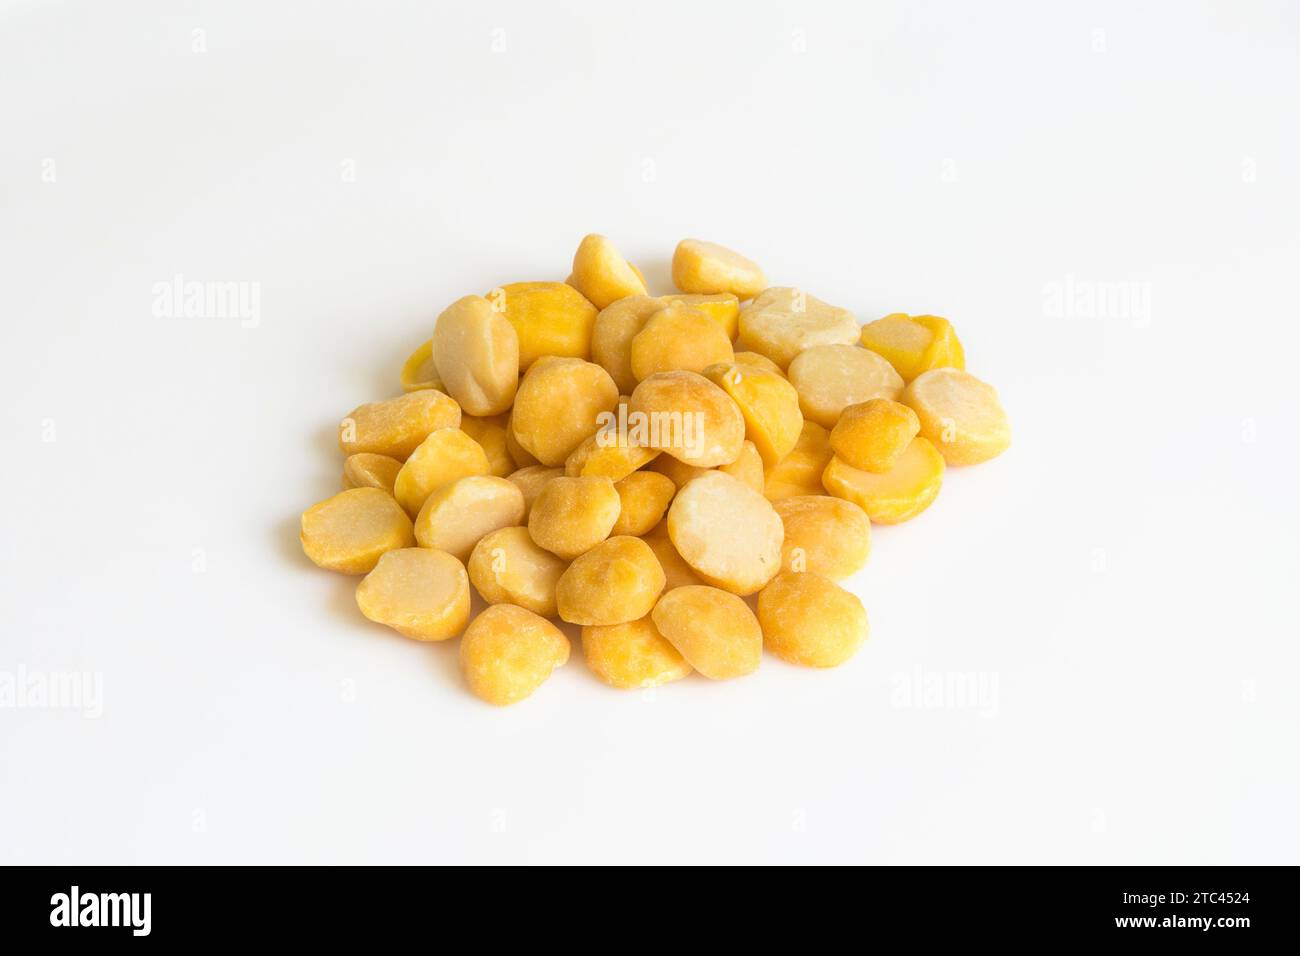 Heap of yellow split chickpeas on white background Stock Photo